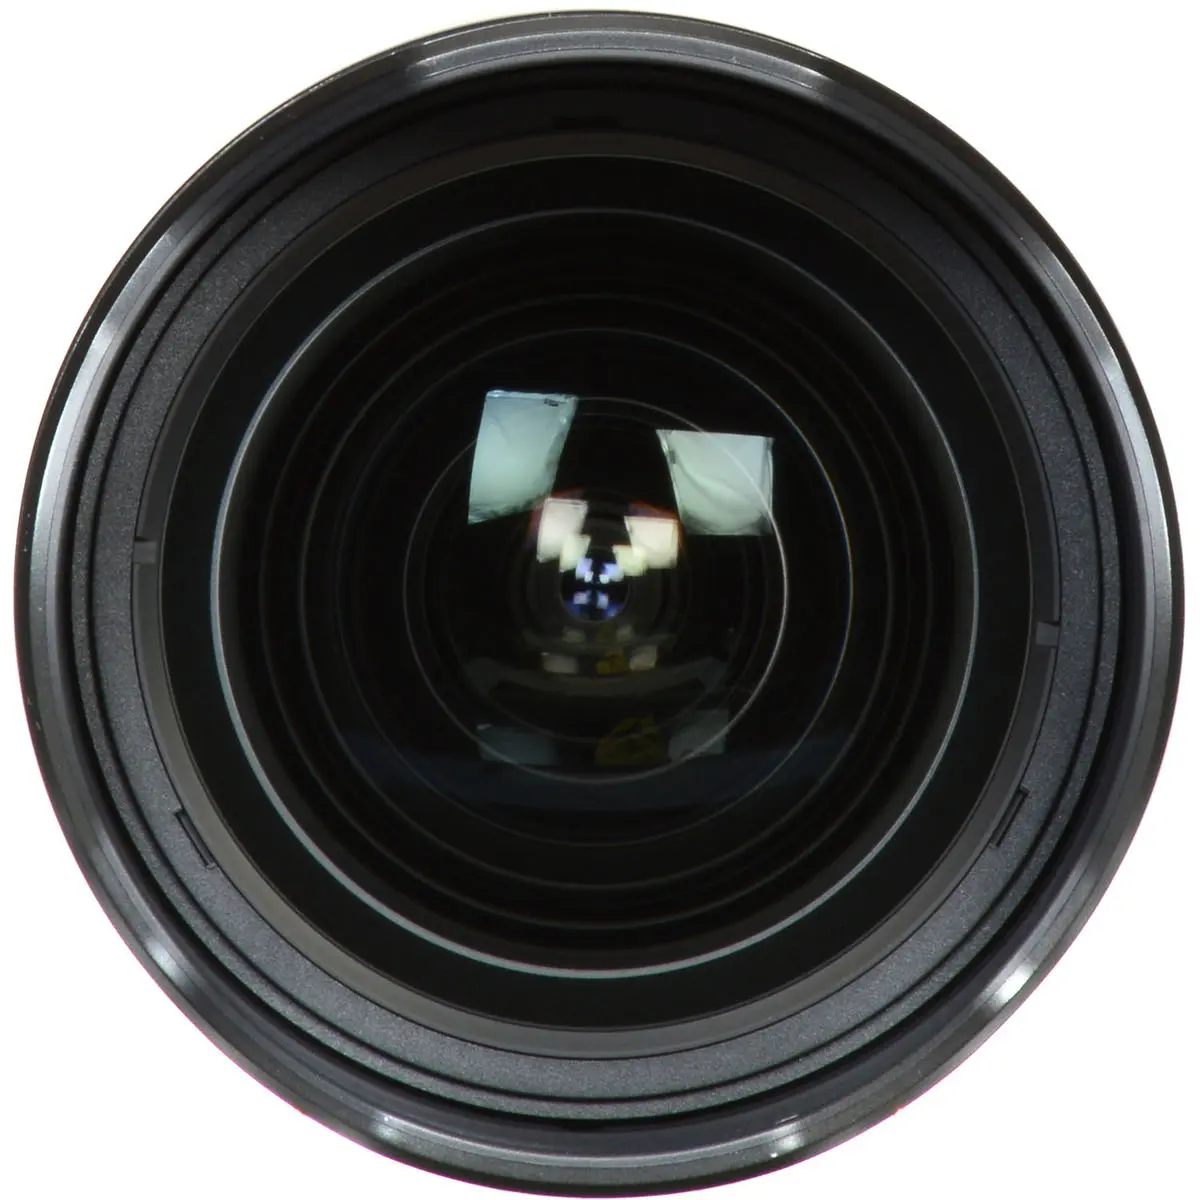 12. Olympus M.ZUIKO DIGITAL ED 7-14mm F2.8 PRO Lens